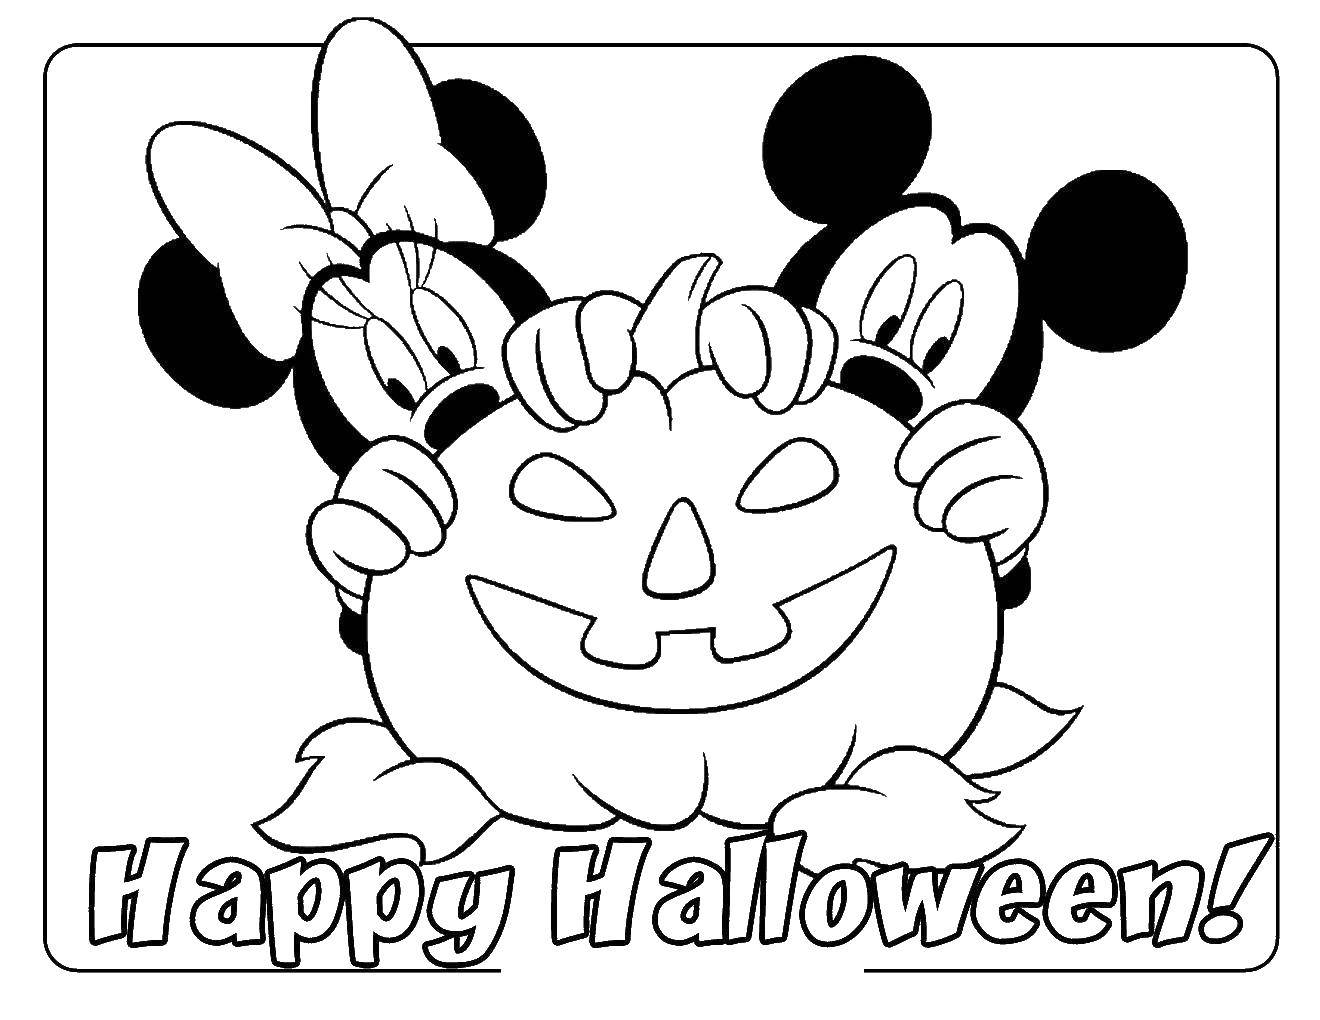 Coloring Happy Halloween. Category Halloween. Tags:  Halloween, pumpkin.